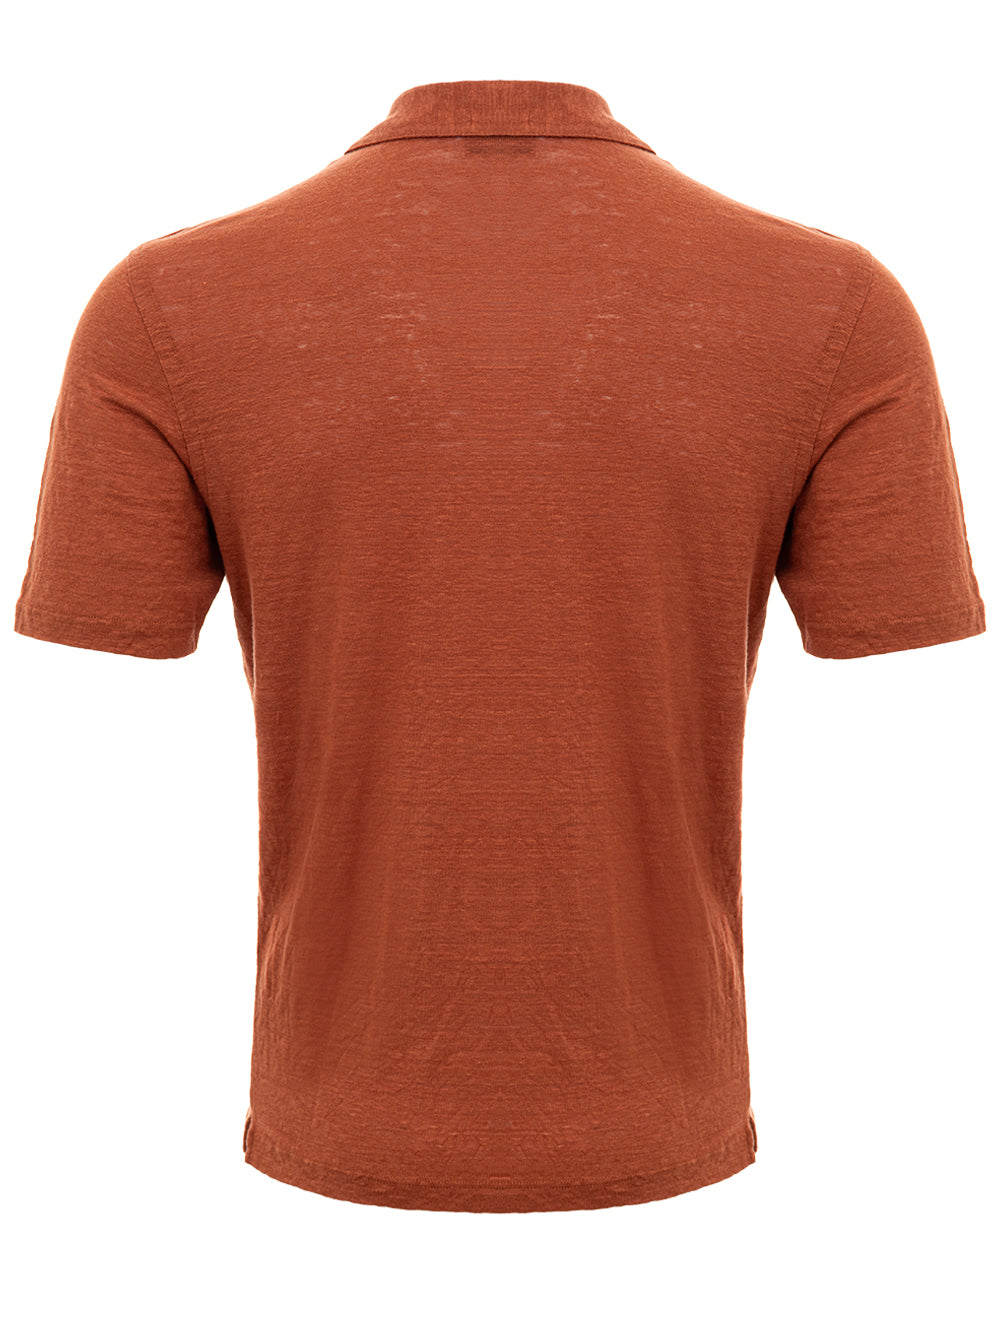 Brown Half Sleeve Shirt in Gran Sasso Linen